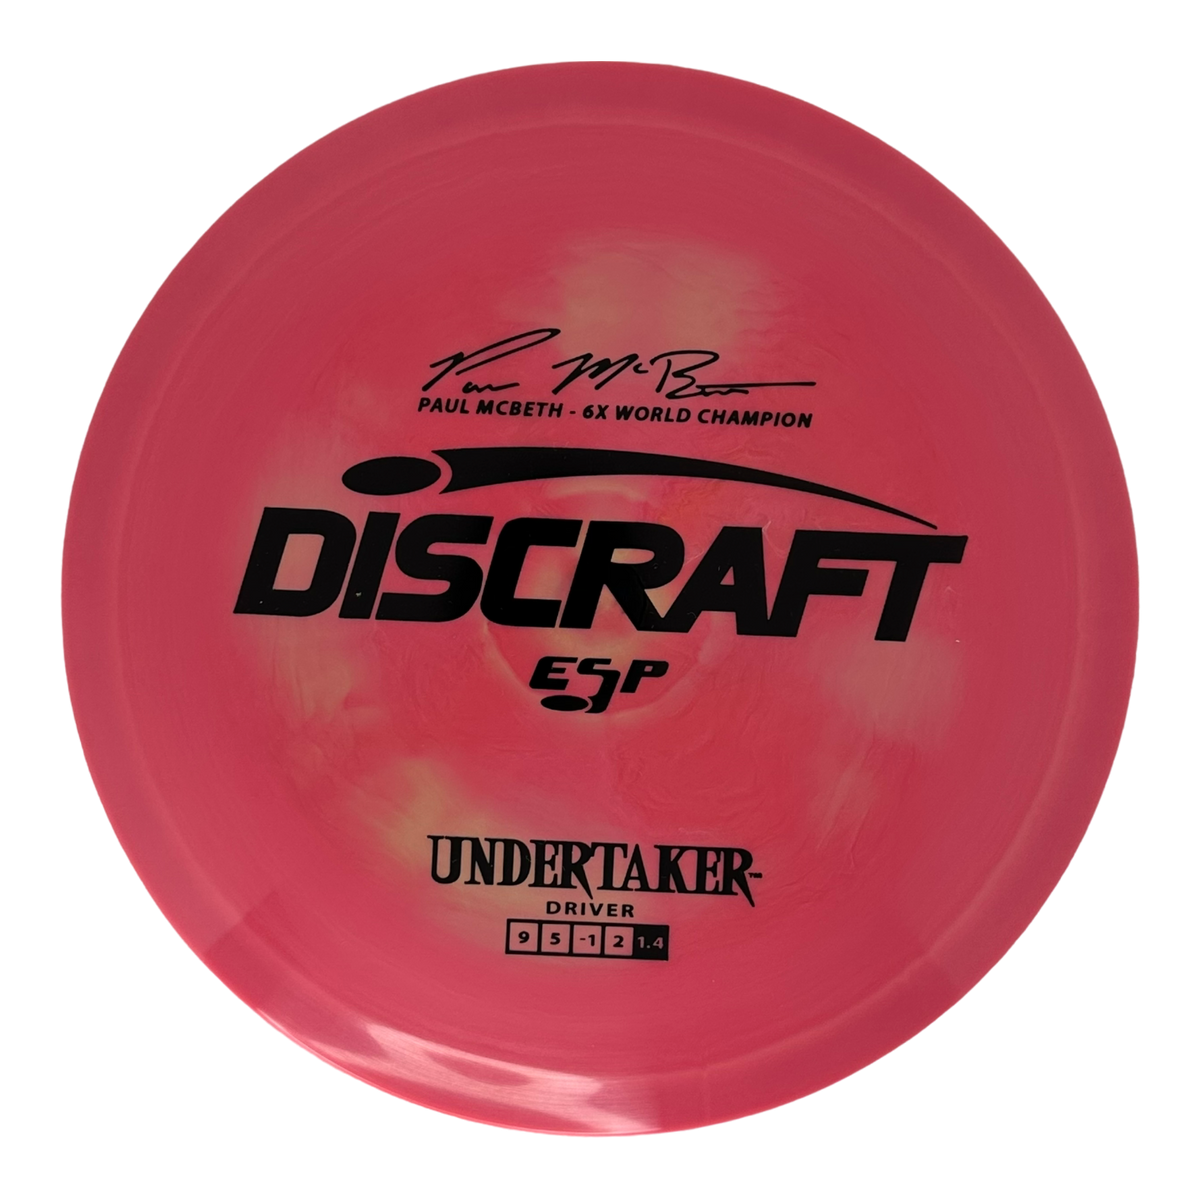 Discraft ESP Undertaker - Paul McBeth 6x Signature Series